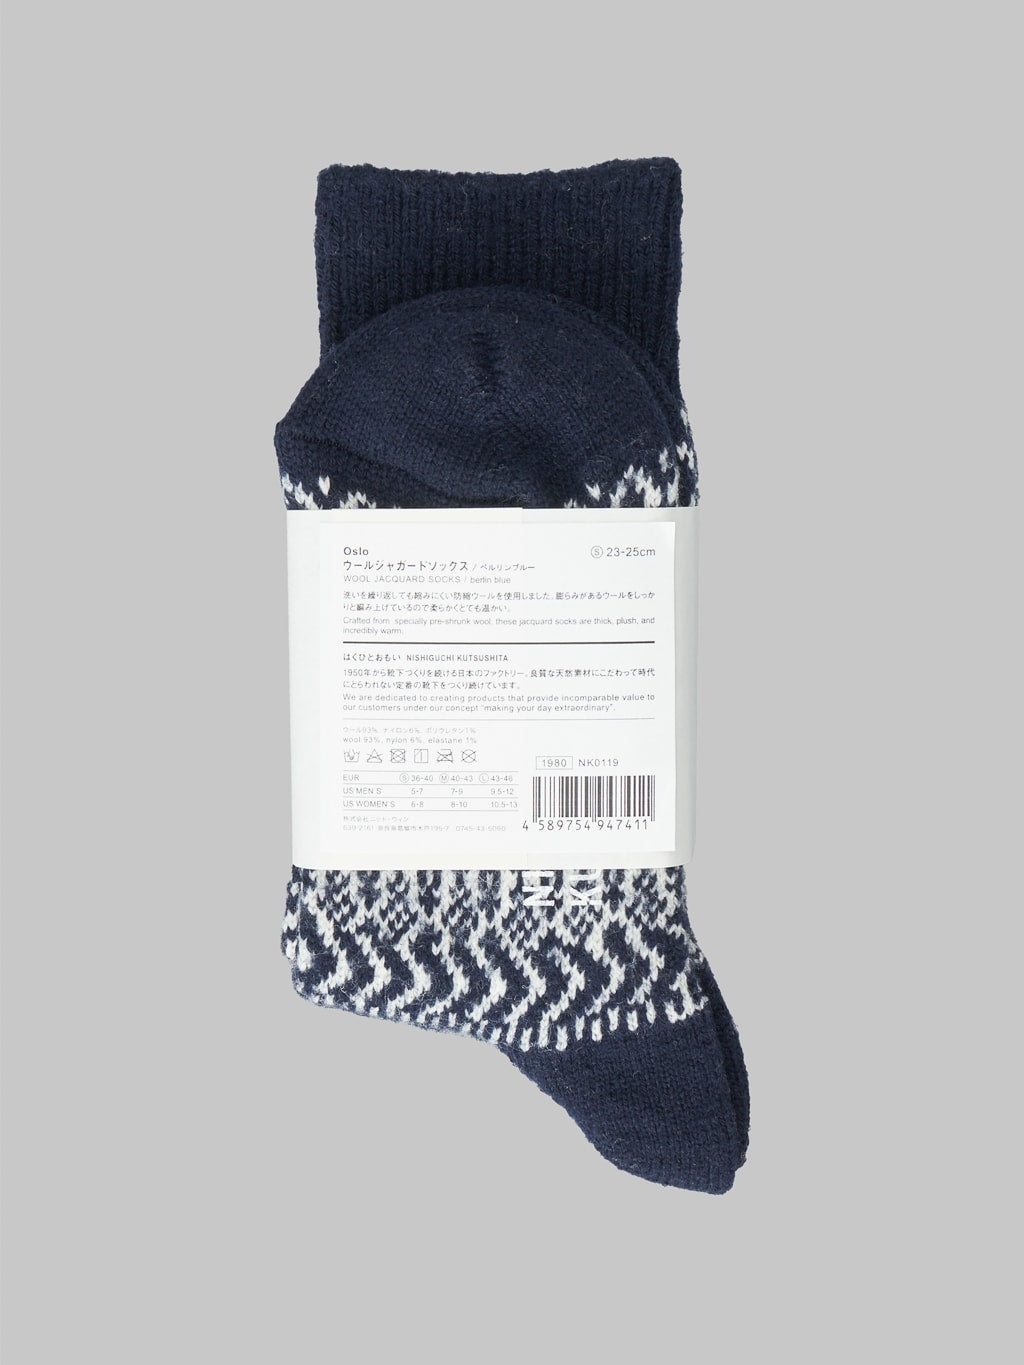 Nishiguchi Kutsushita Wool Jacquard Socks Berlin Blue packaging details